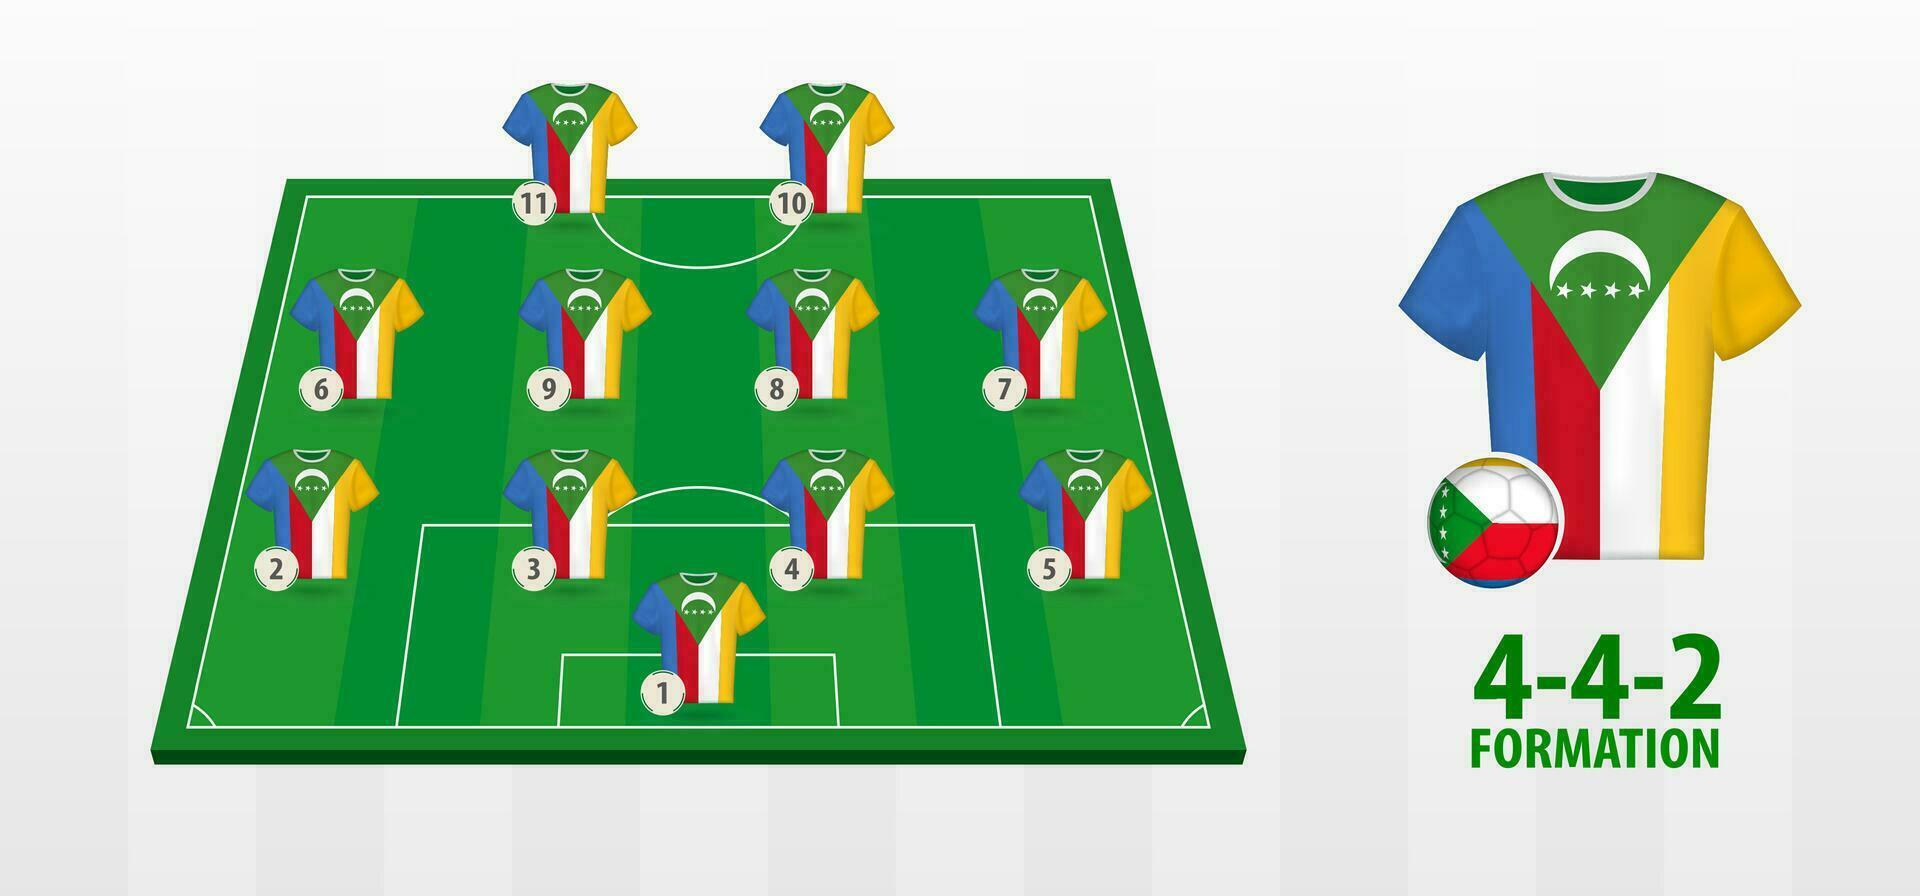 Comoros National Football Team Formation on Football Field. vector